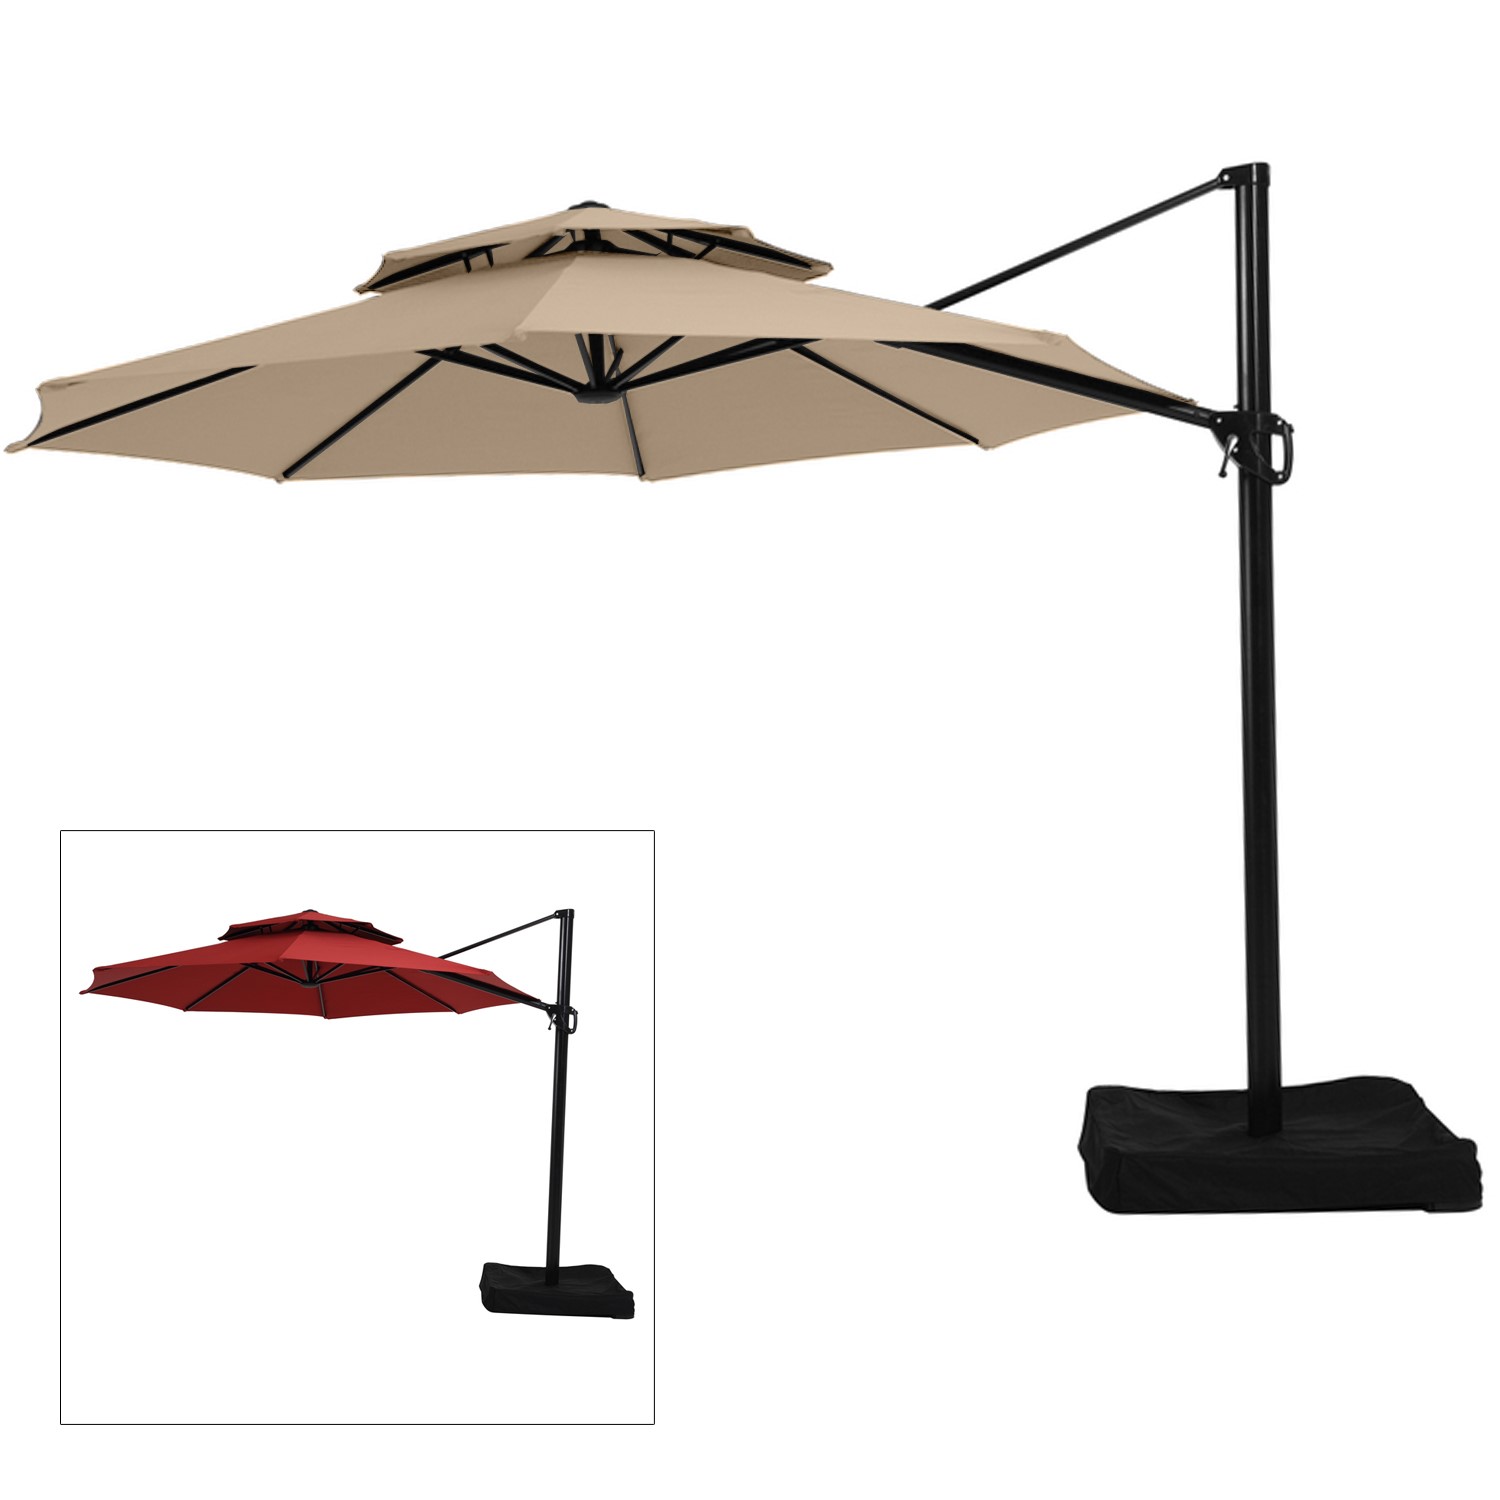 Replacment Canopy for YJAF-819R Umbrella - Riplock - BEIGE